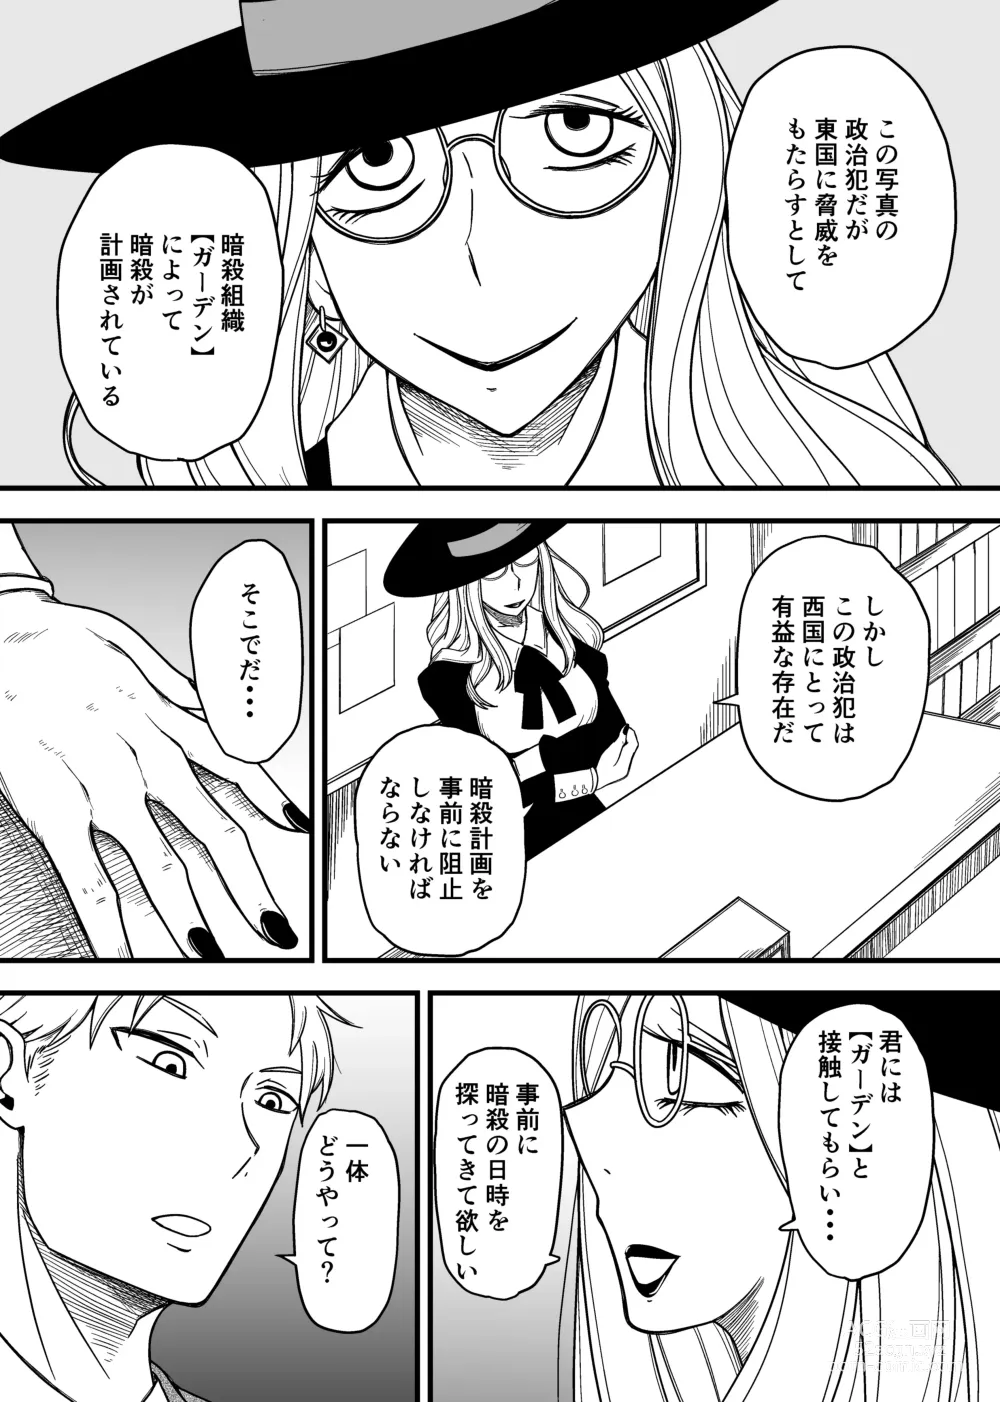 Page 3 of doujinshi SKINxFAMILY